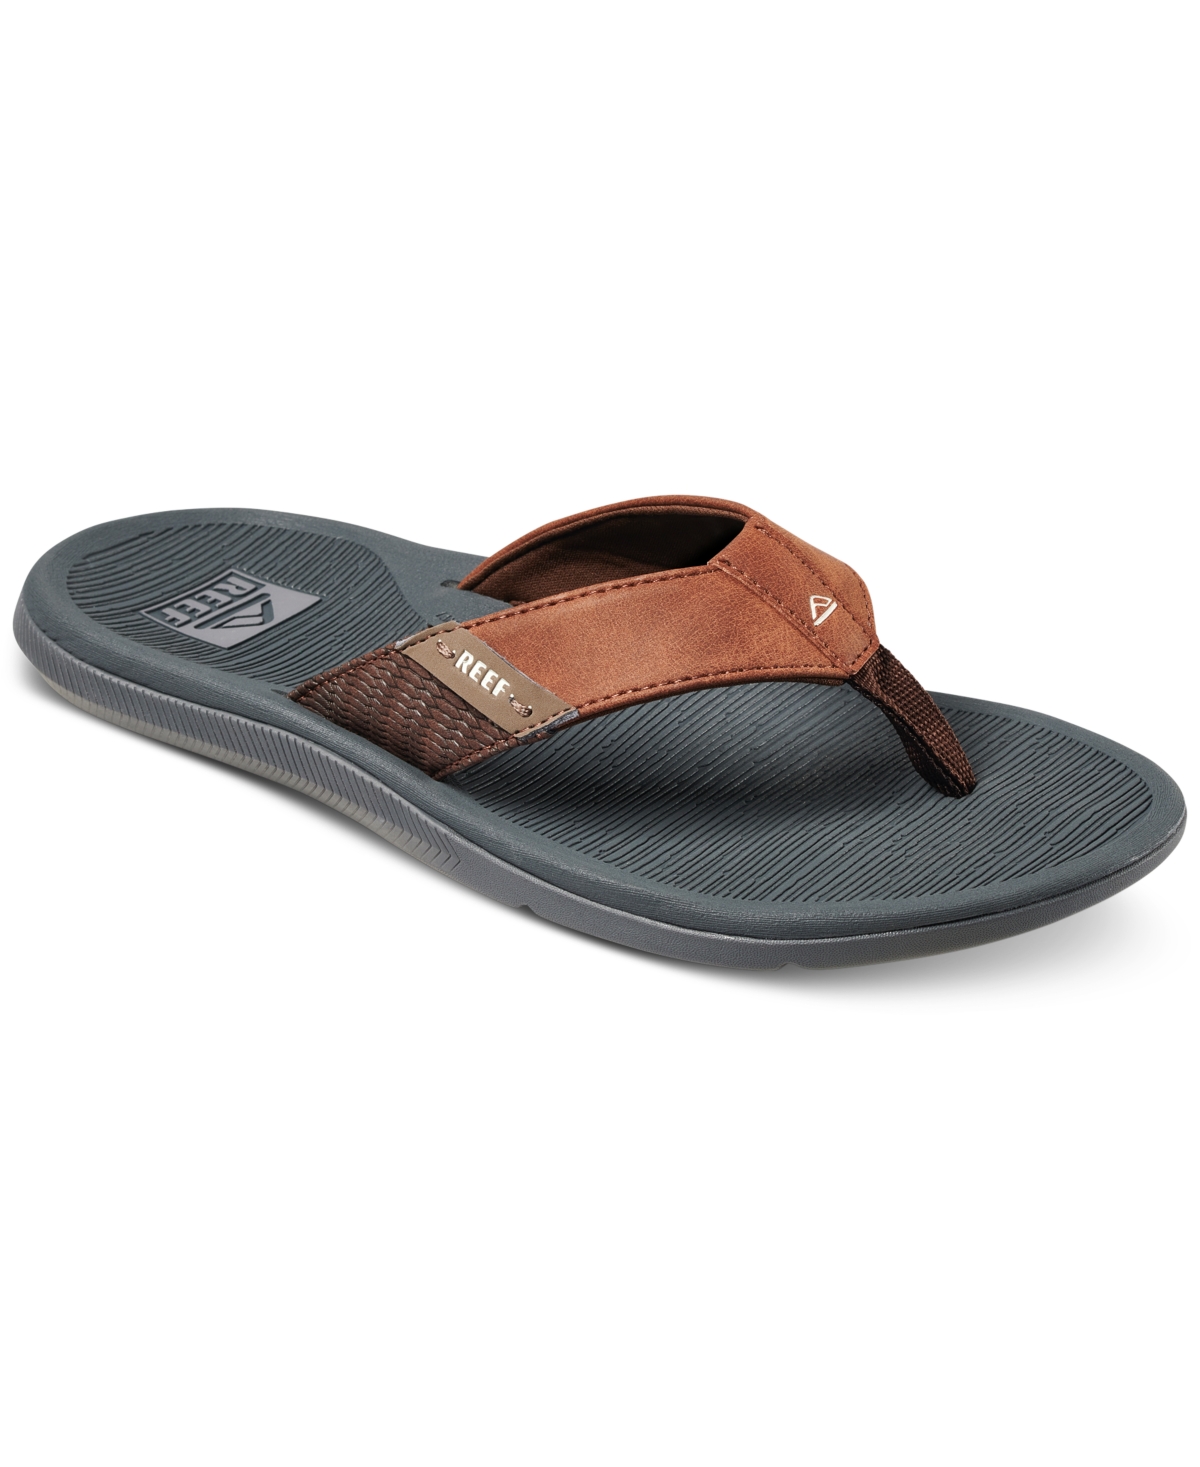 Men's Santa Ana Padded & Waterproof Flip-Flop Sandal - Grey/tan